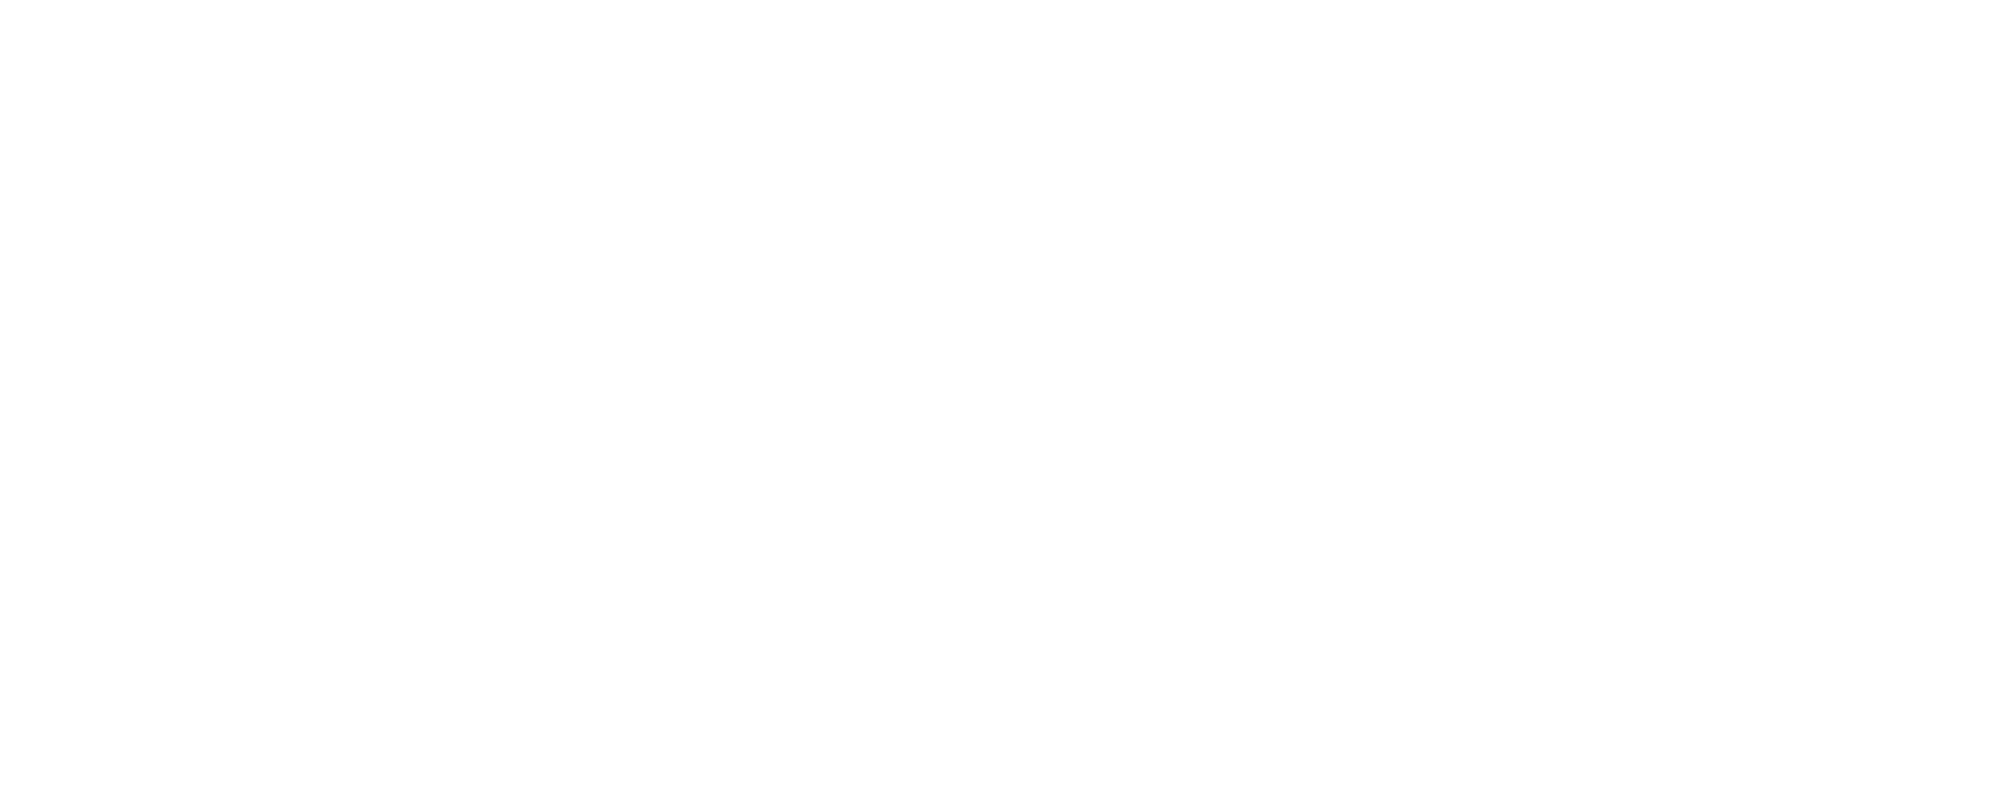 VividScape Photography